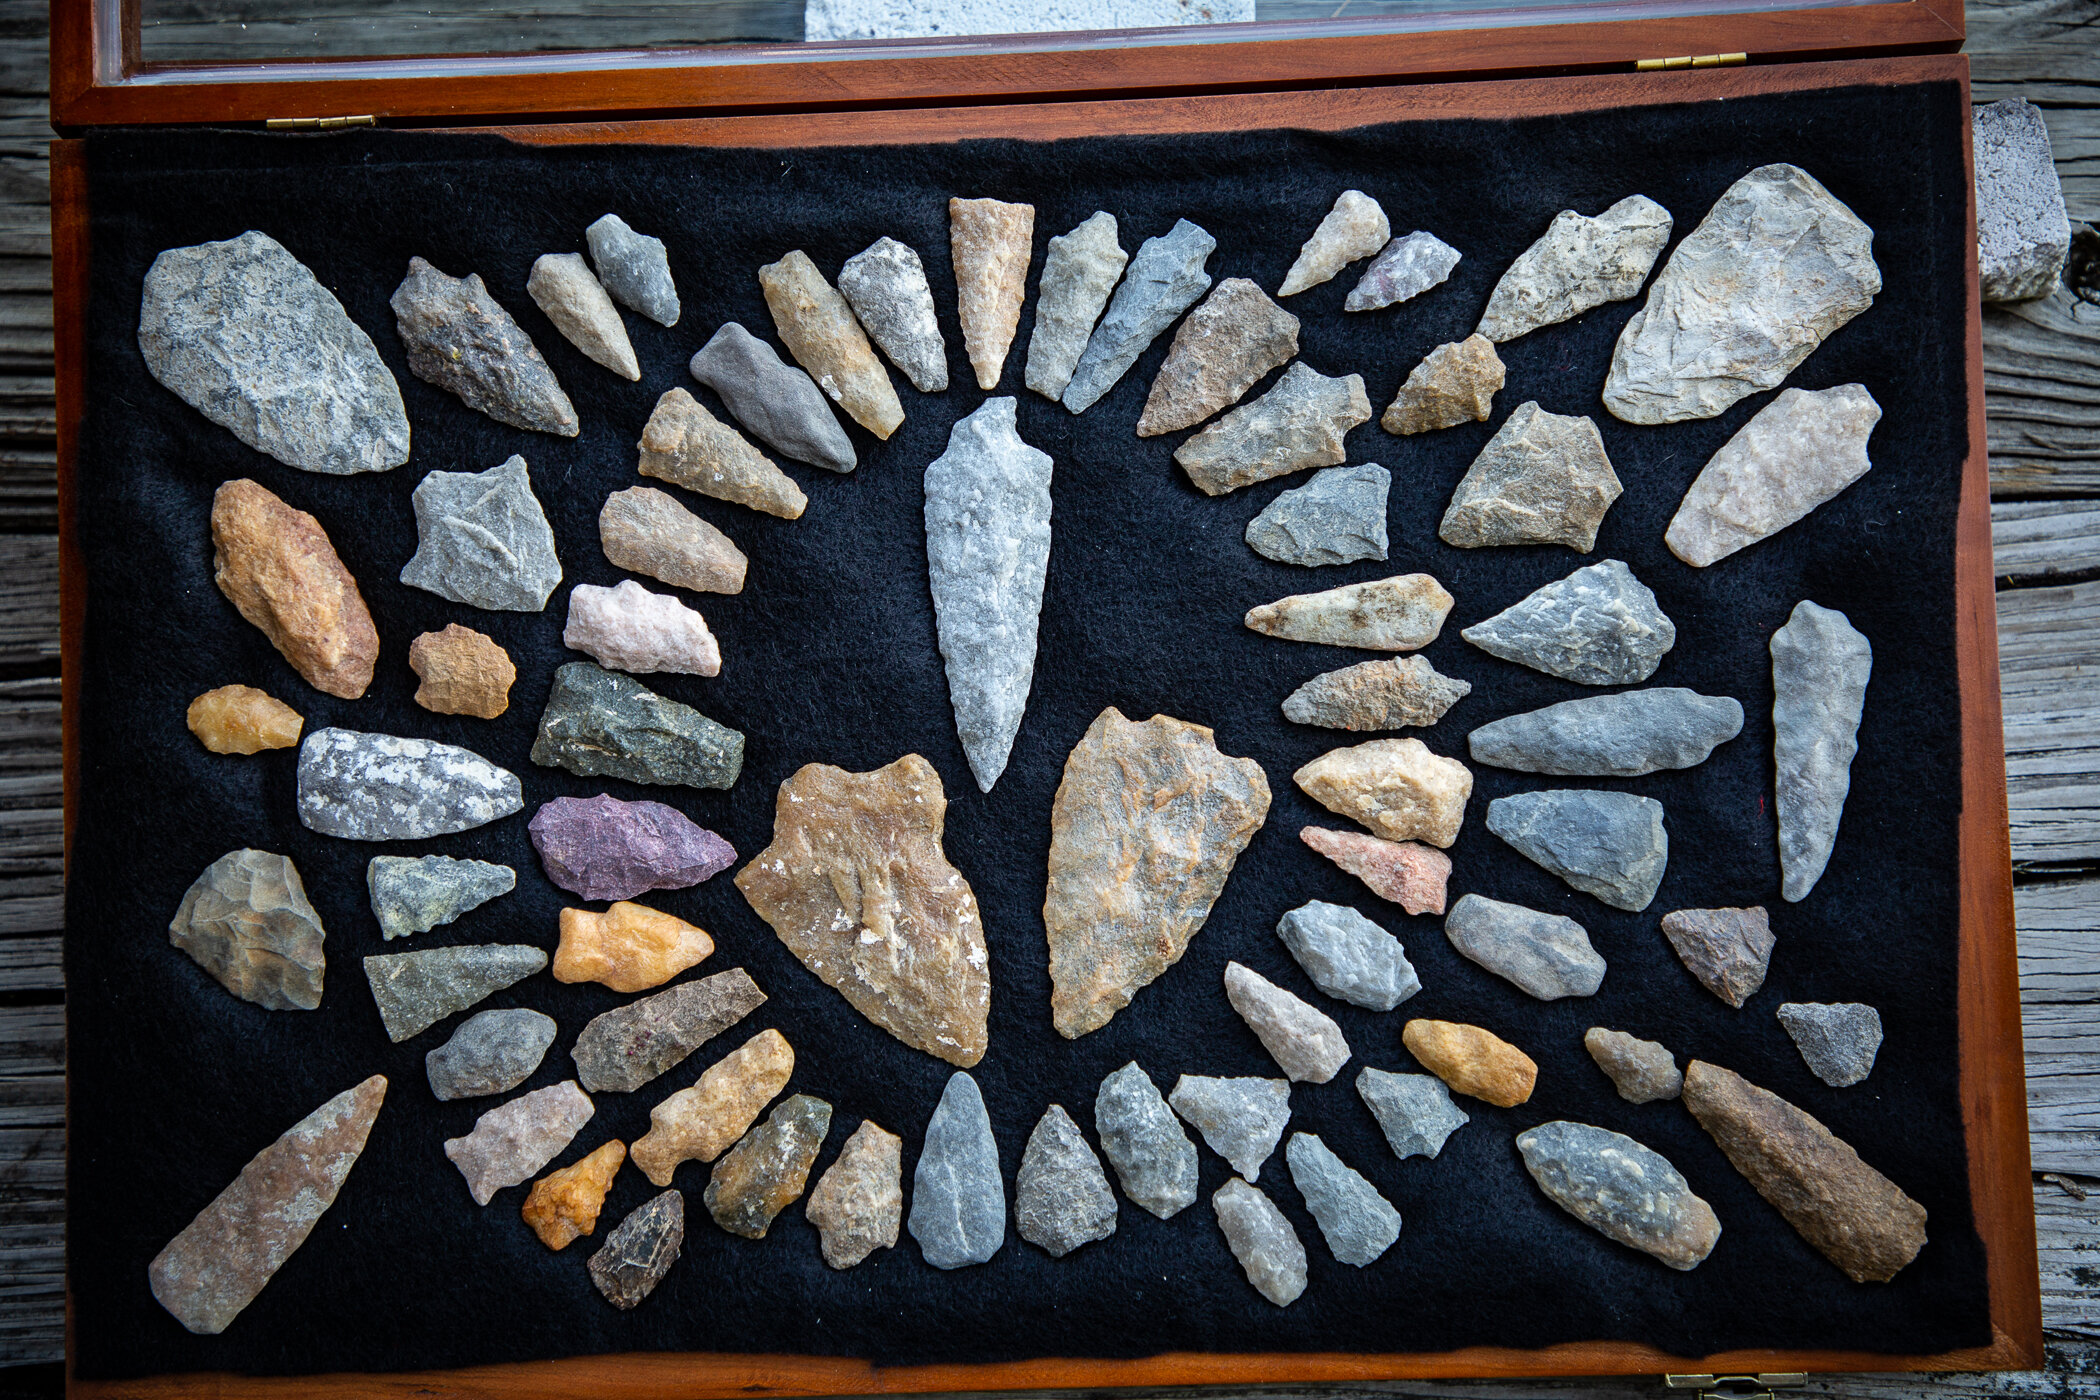 smith island arrowhead collection (1 of 1) copy.jpg